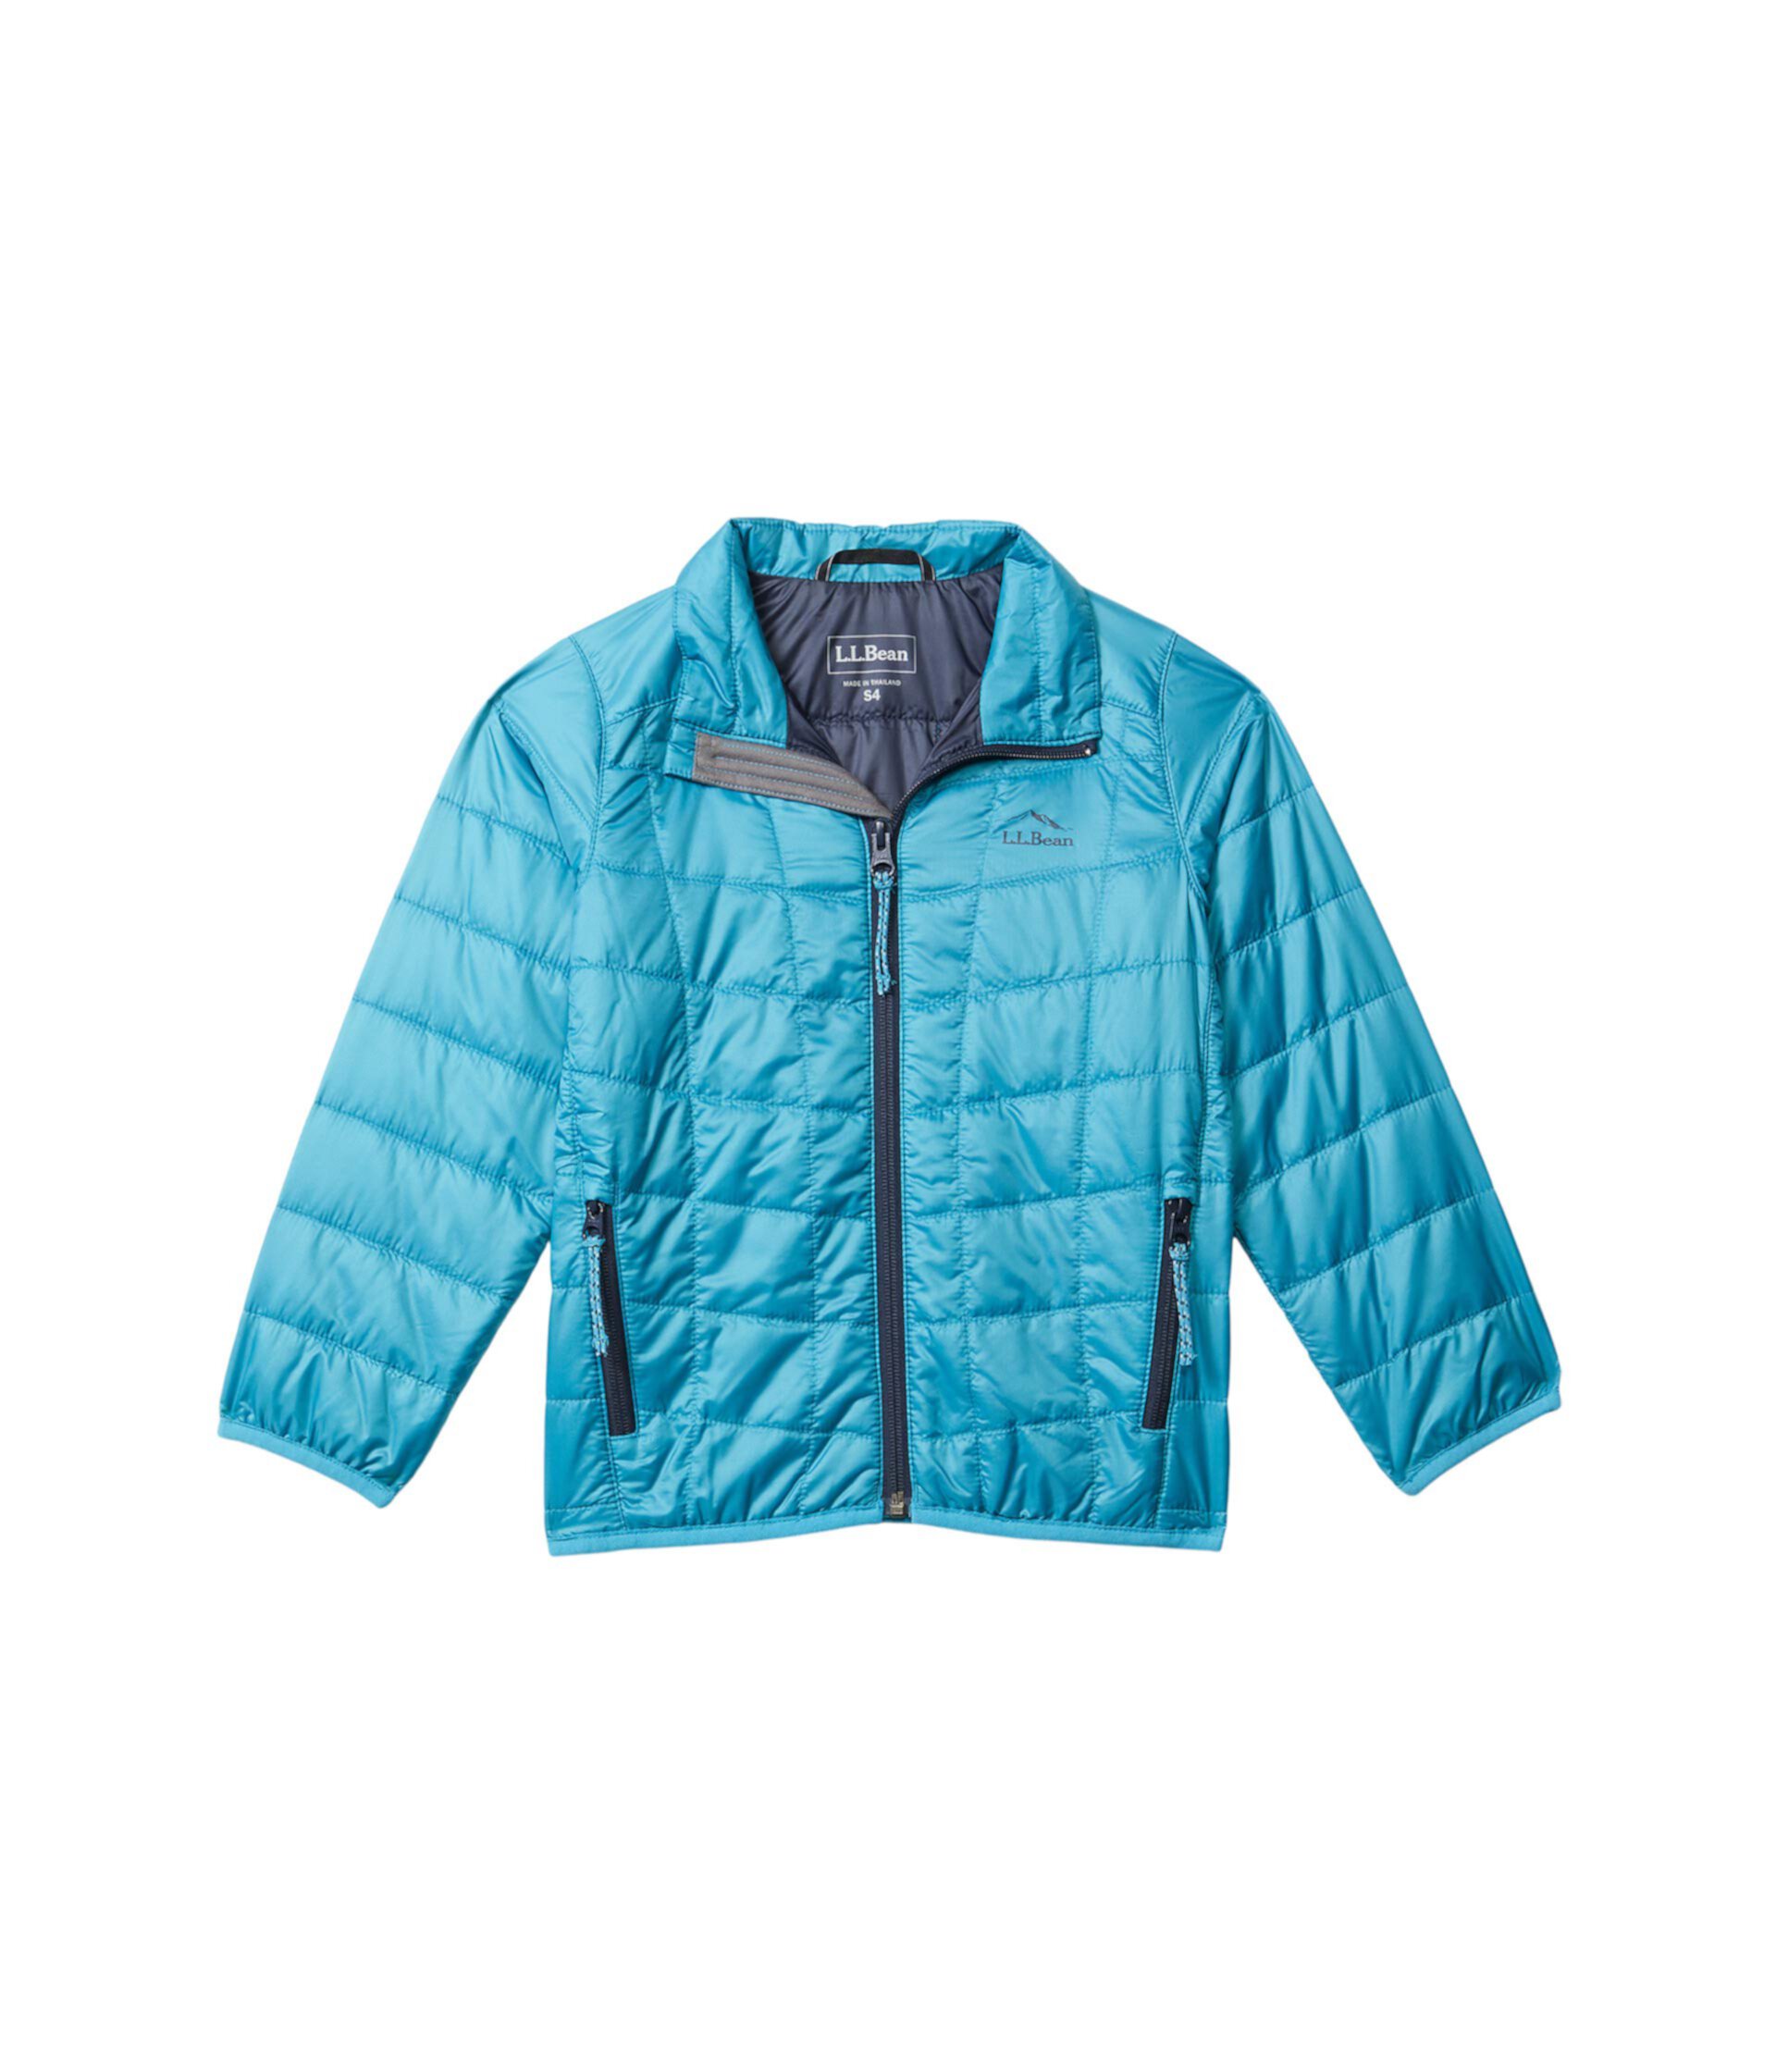 Куртка PrimaLoft® Packaway (для маленьких детей) L.L.Bean